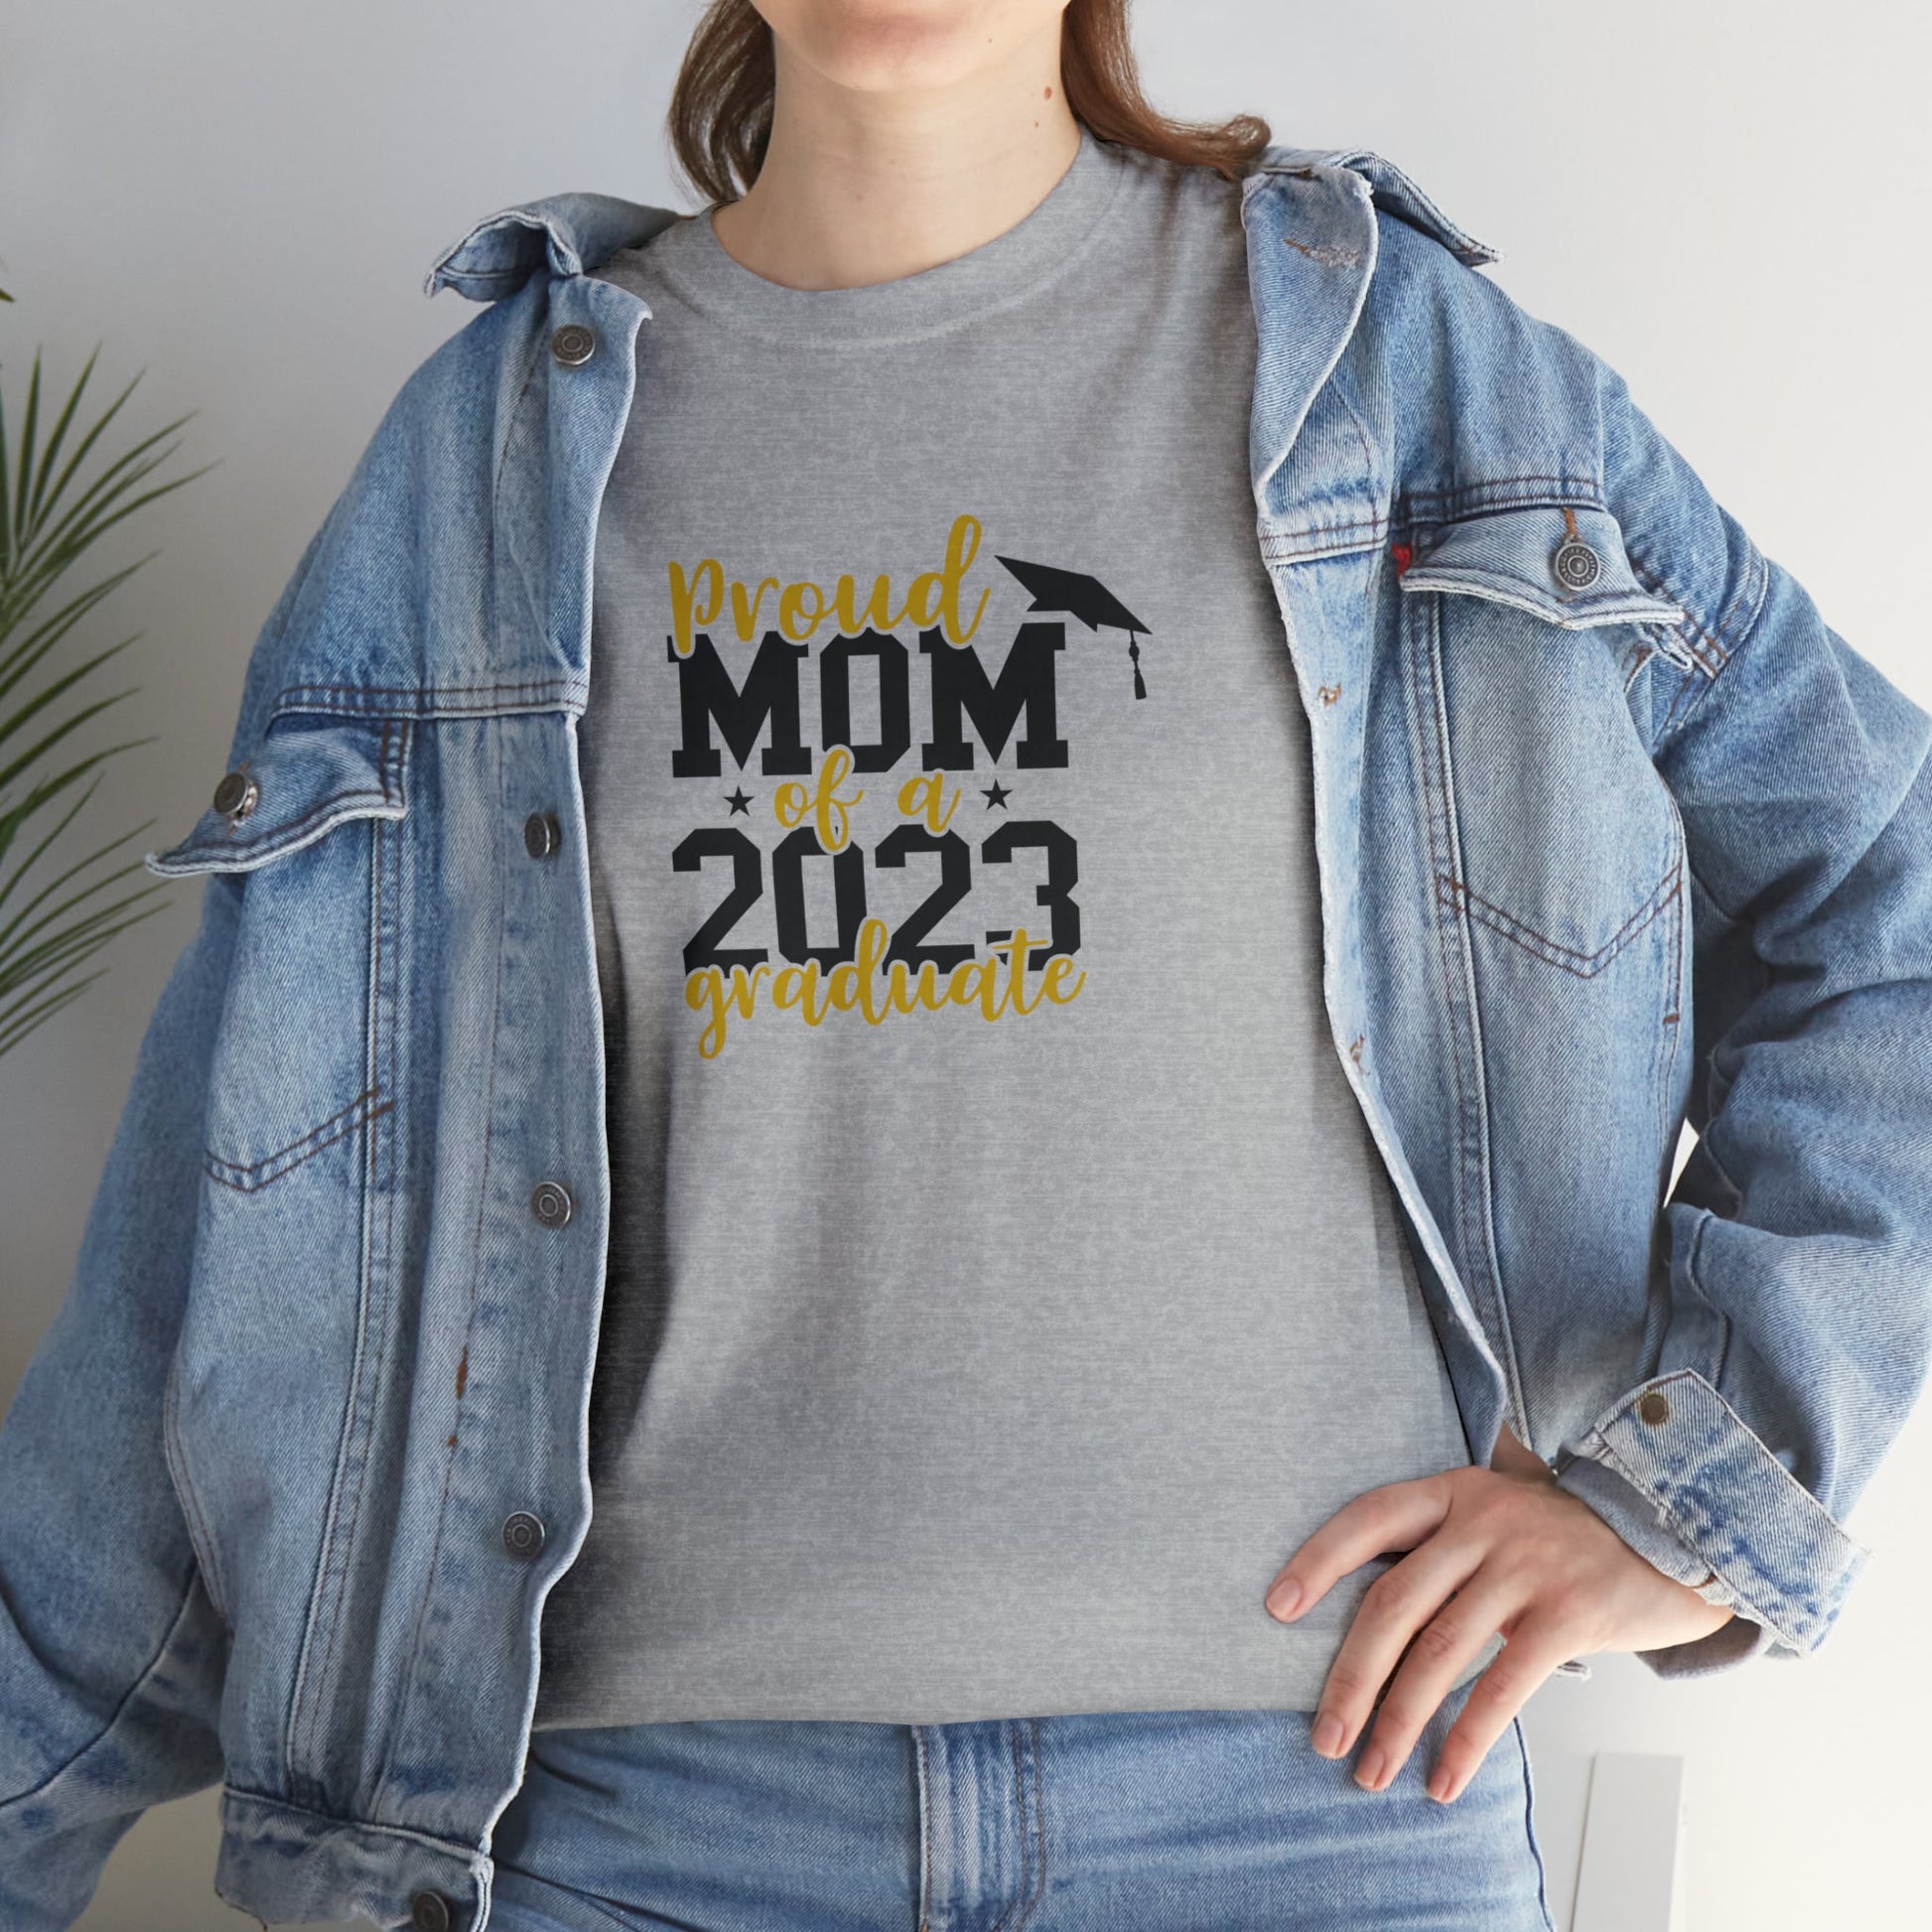 Proud Mom of 2023 Graduate Short Sleeve Cotton T-Shirt - numonet